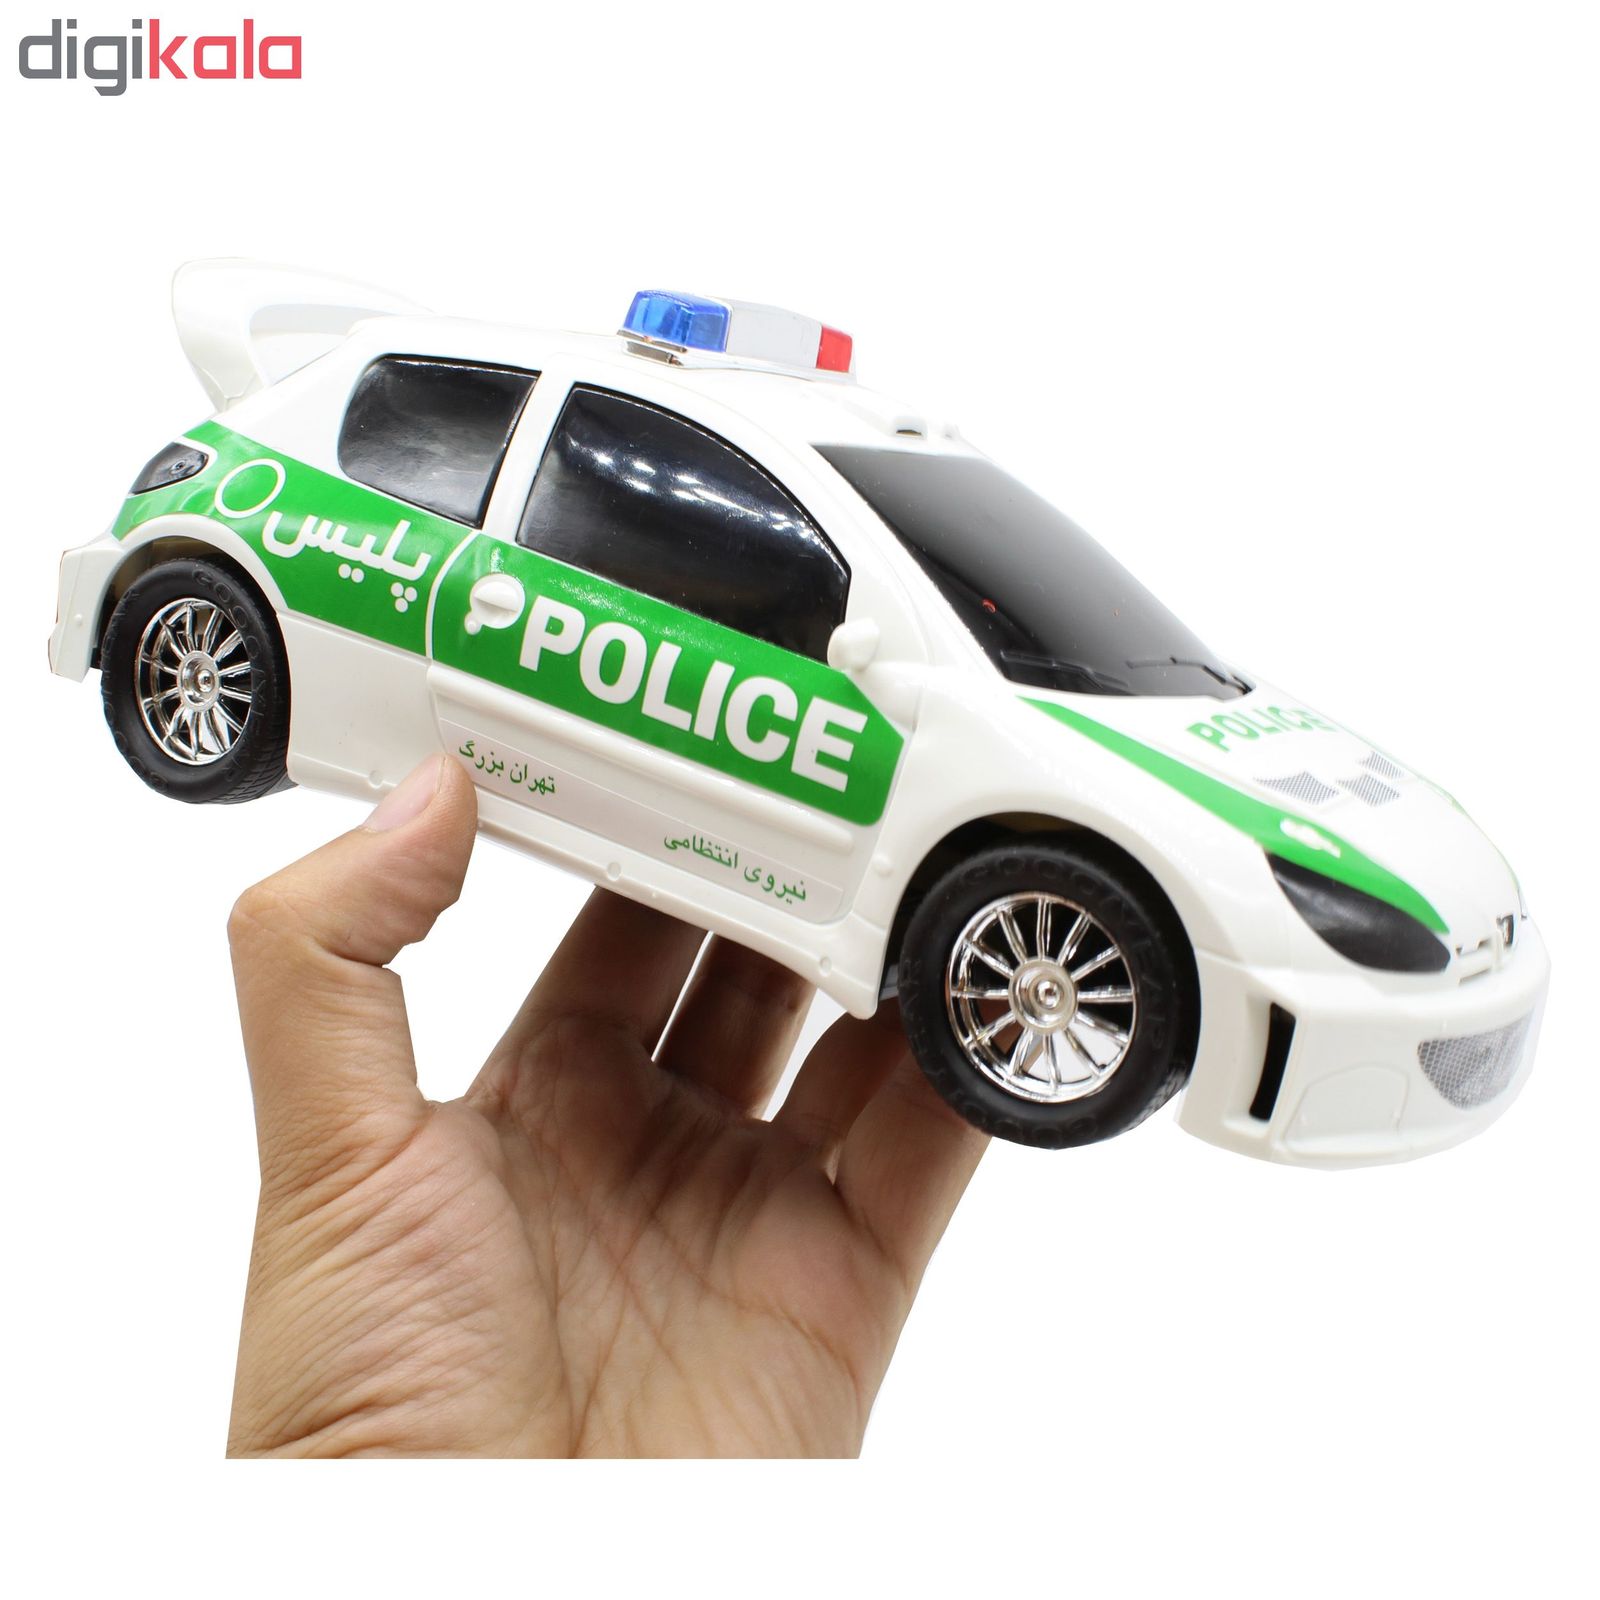 ماشین بازی دورج توی طرح پلیس مدل K1-206